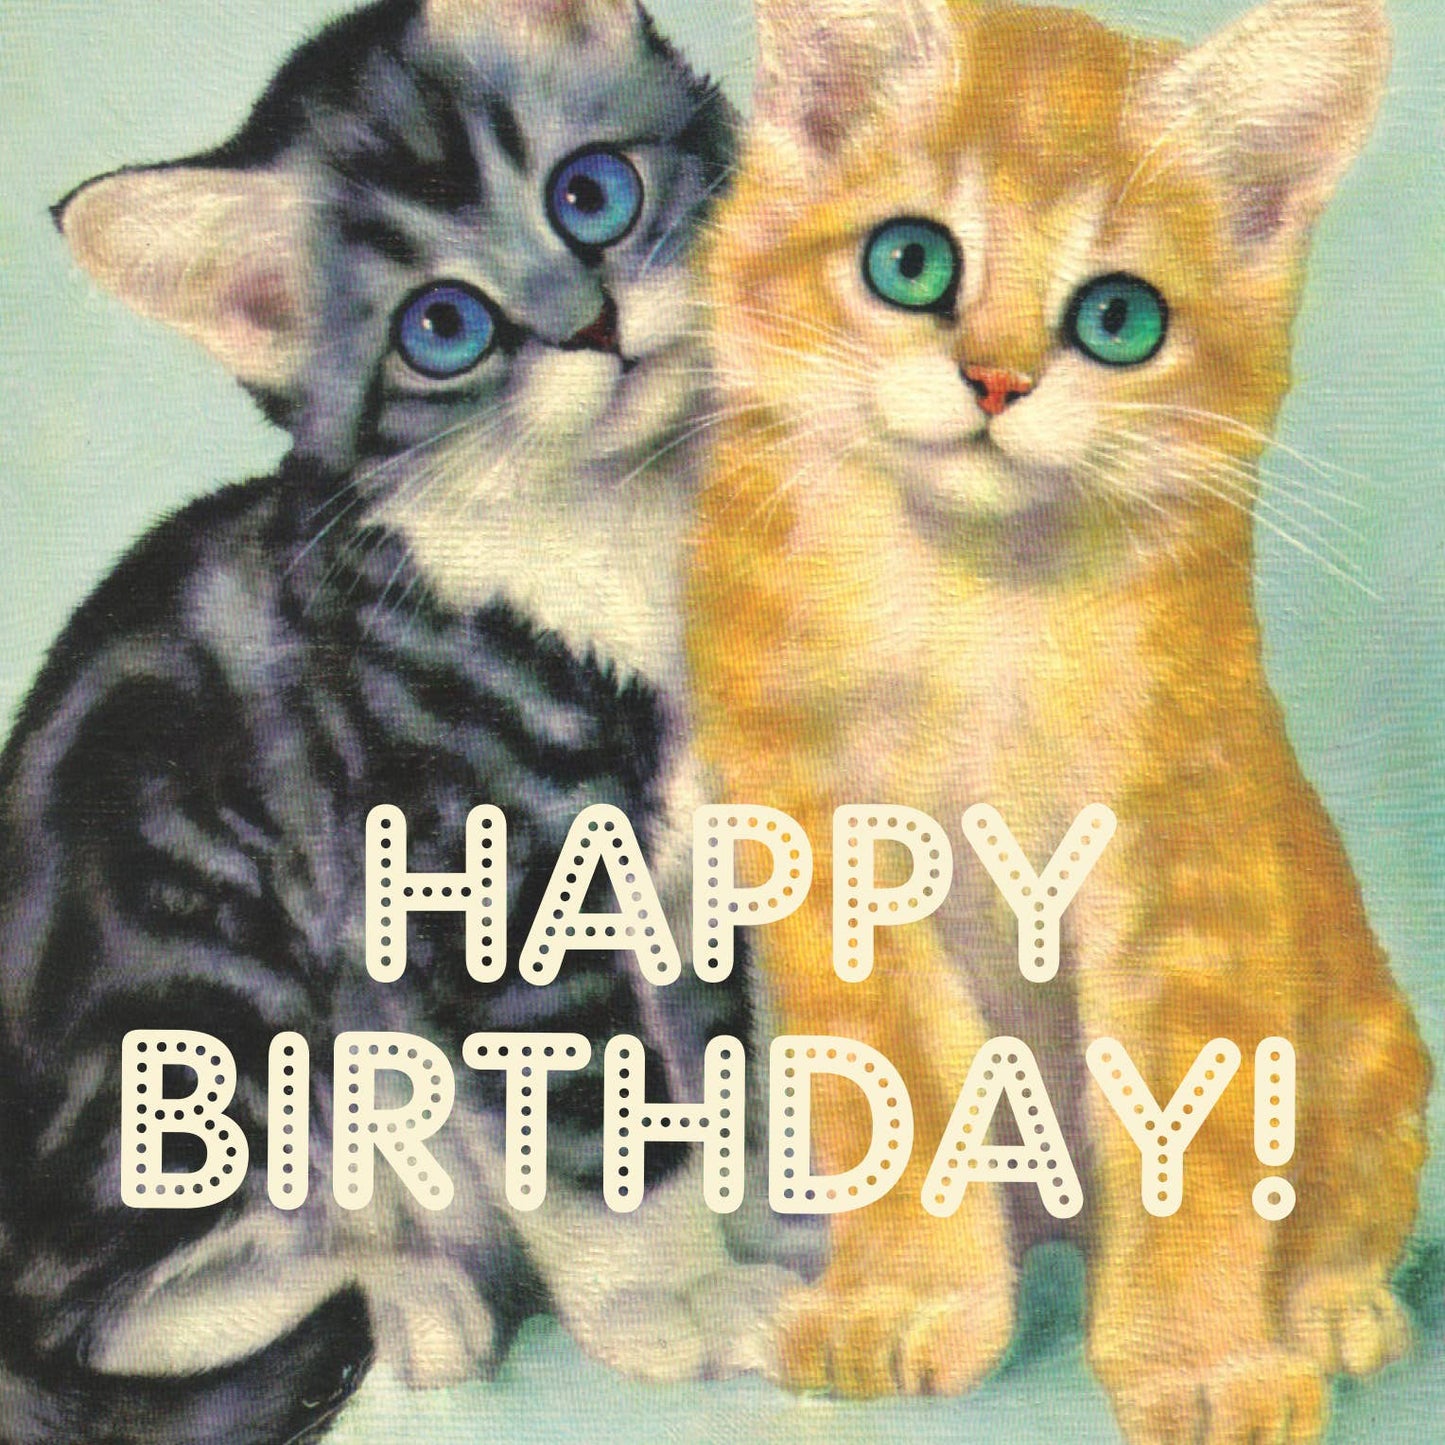 Greeting Card - Birthday: Asshole Cats